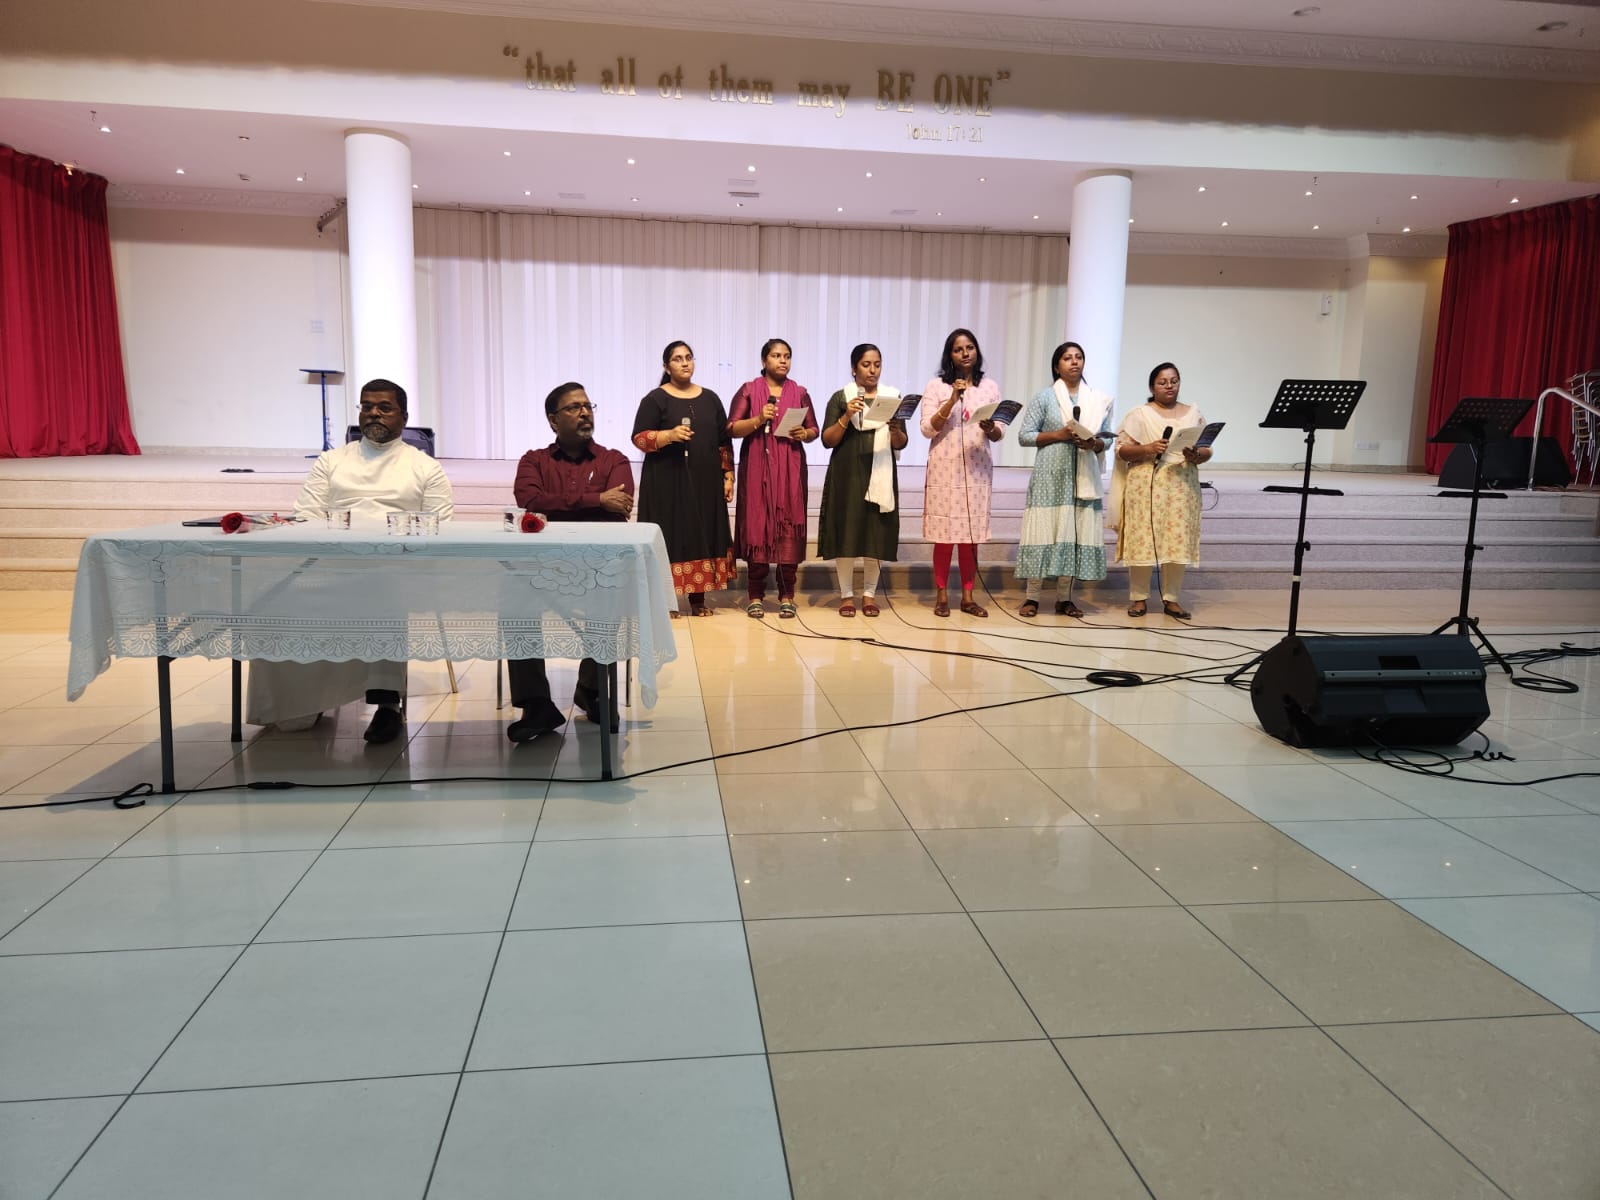 Singing session led by Sunday School teachers